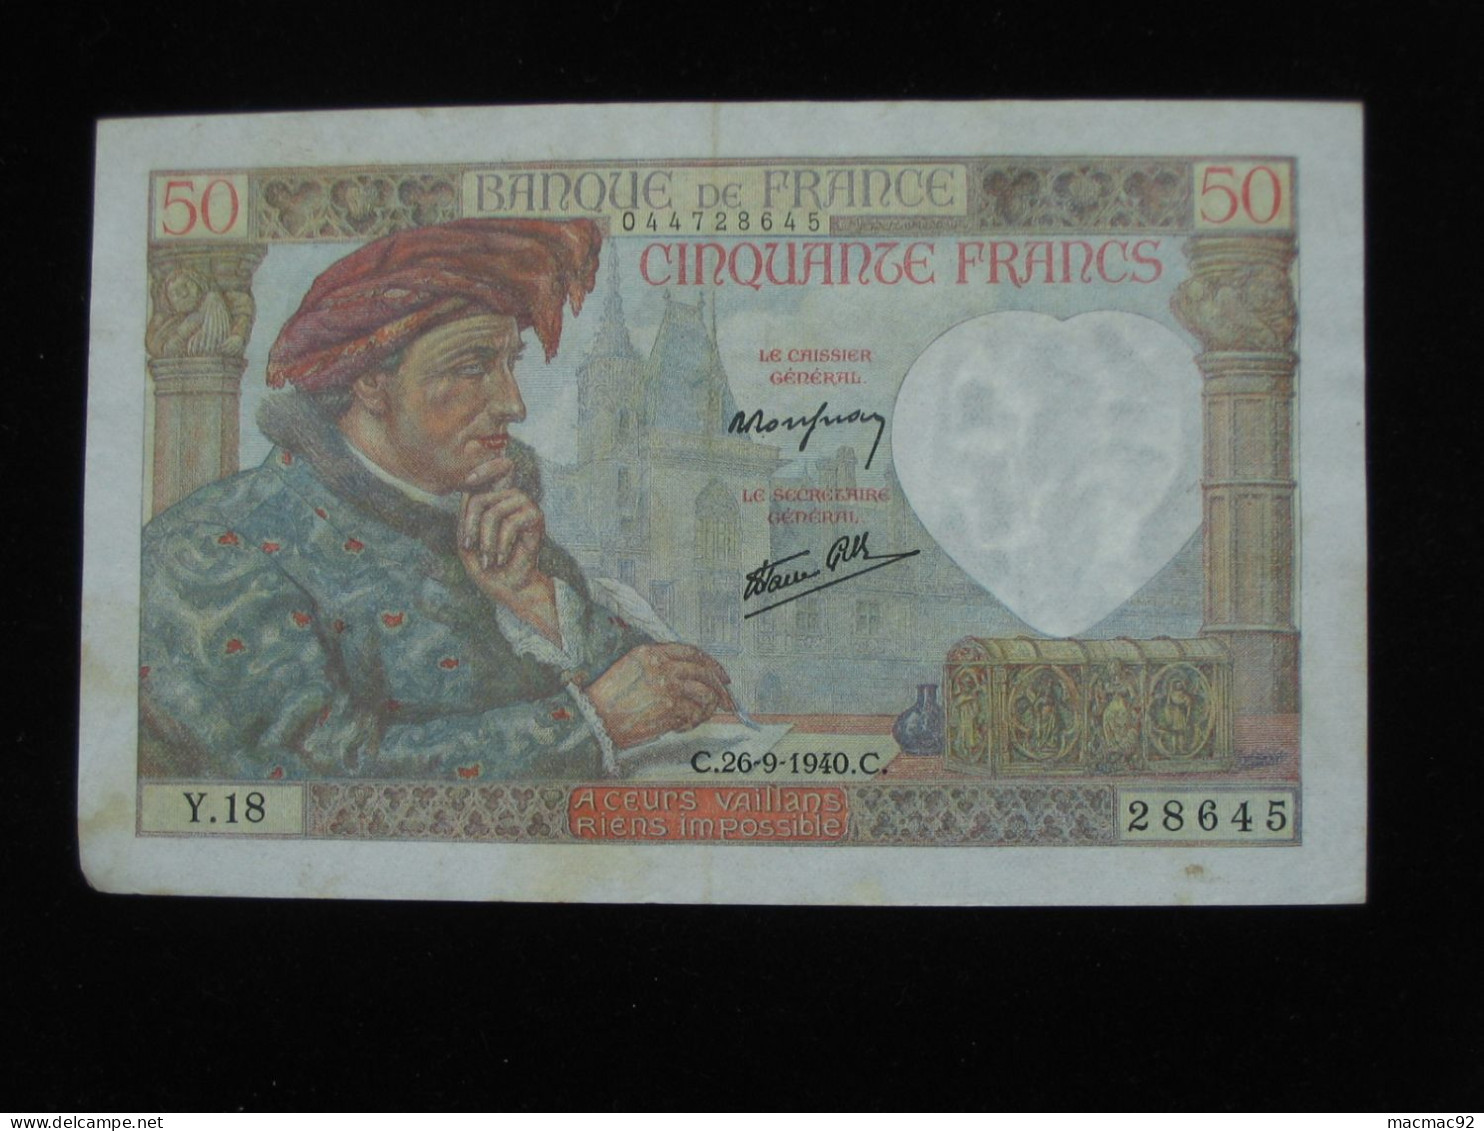 SUPERBE 50 Cinquante Francs - Jacques Coeur - 26-9-1940   **** EN ACHAT IMMEDIAT **** - 50 F 1940-1942 ''Jacques Coeur''